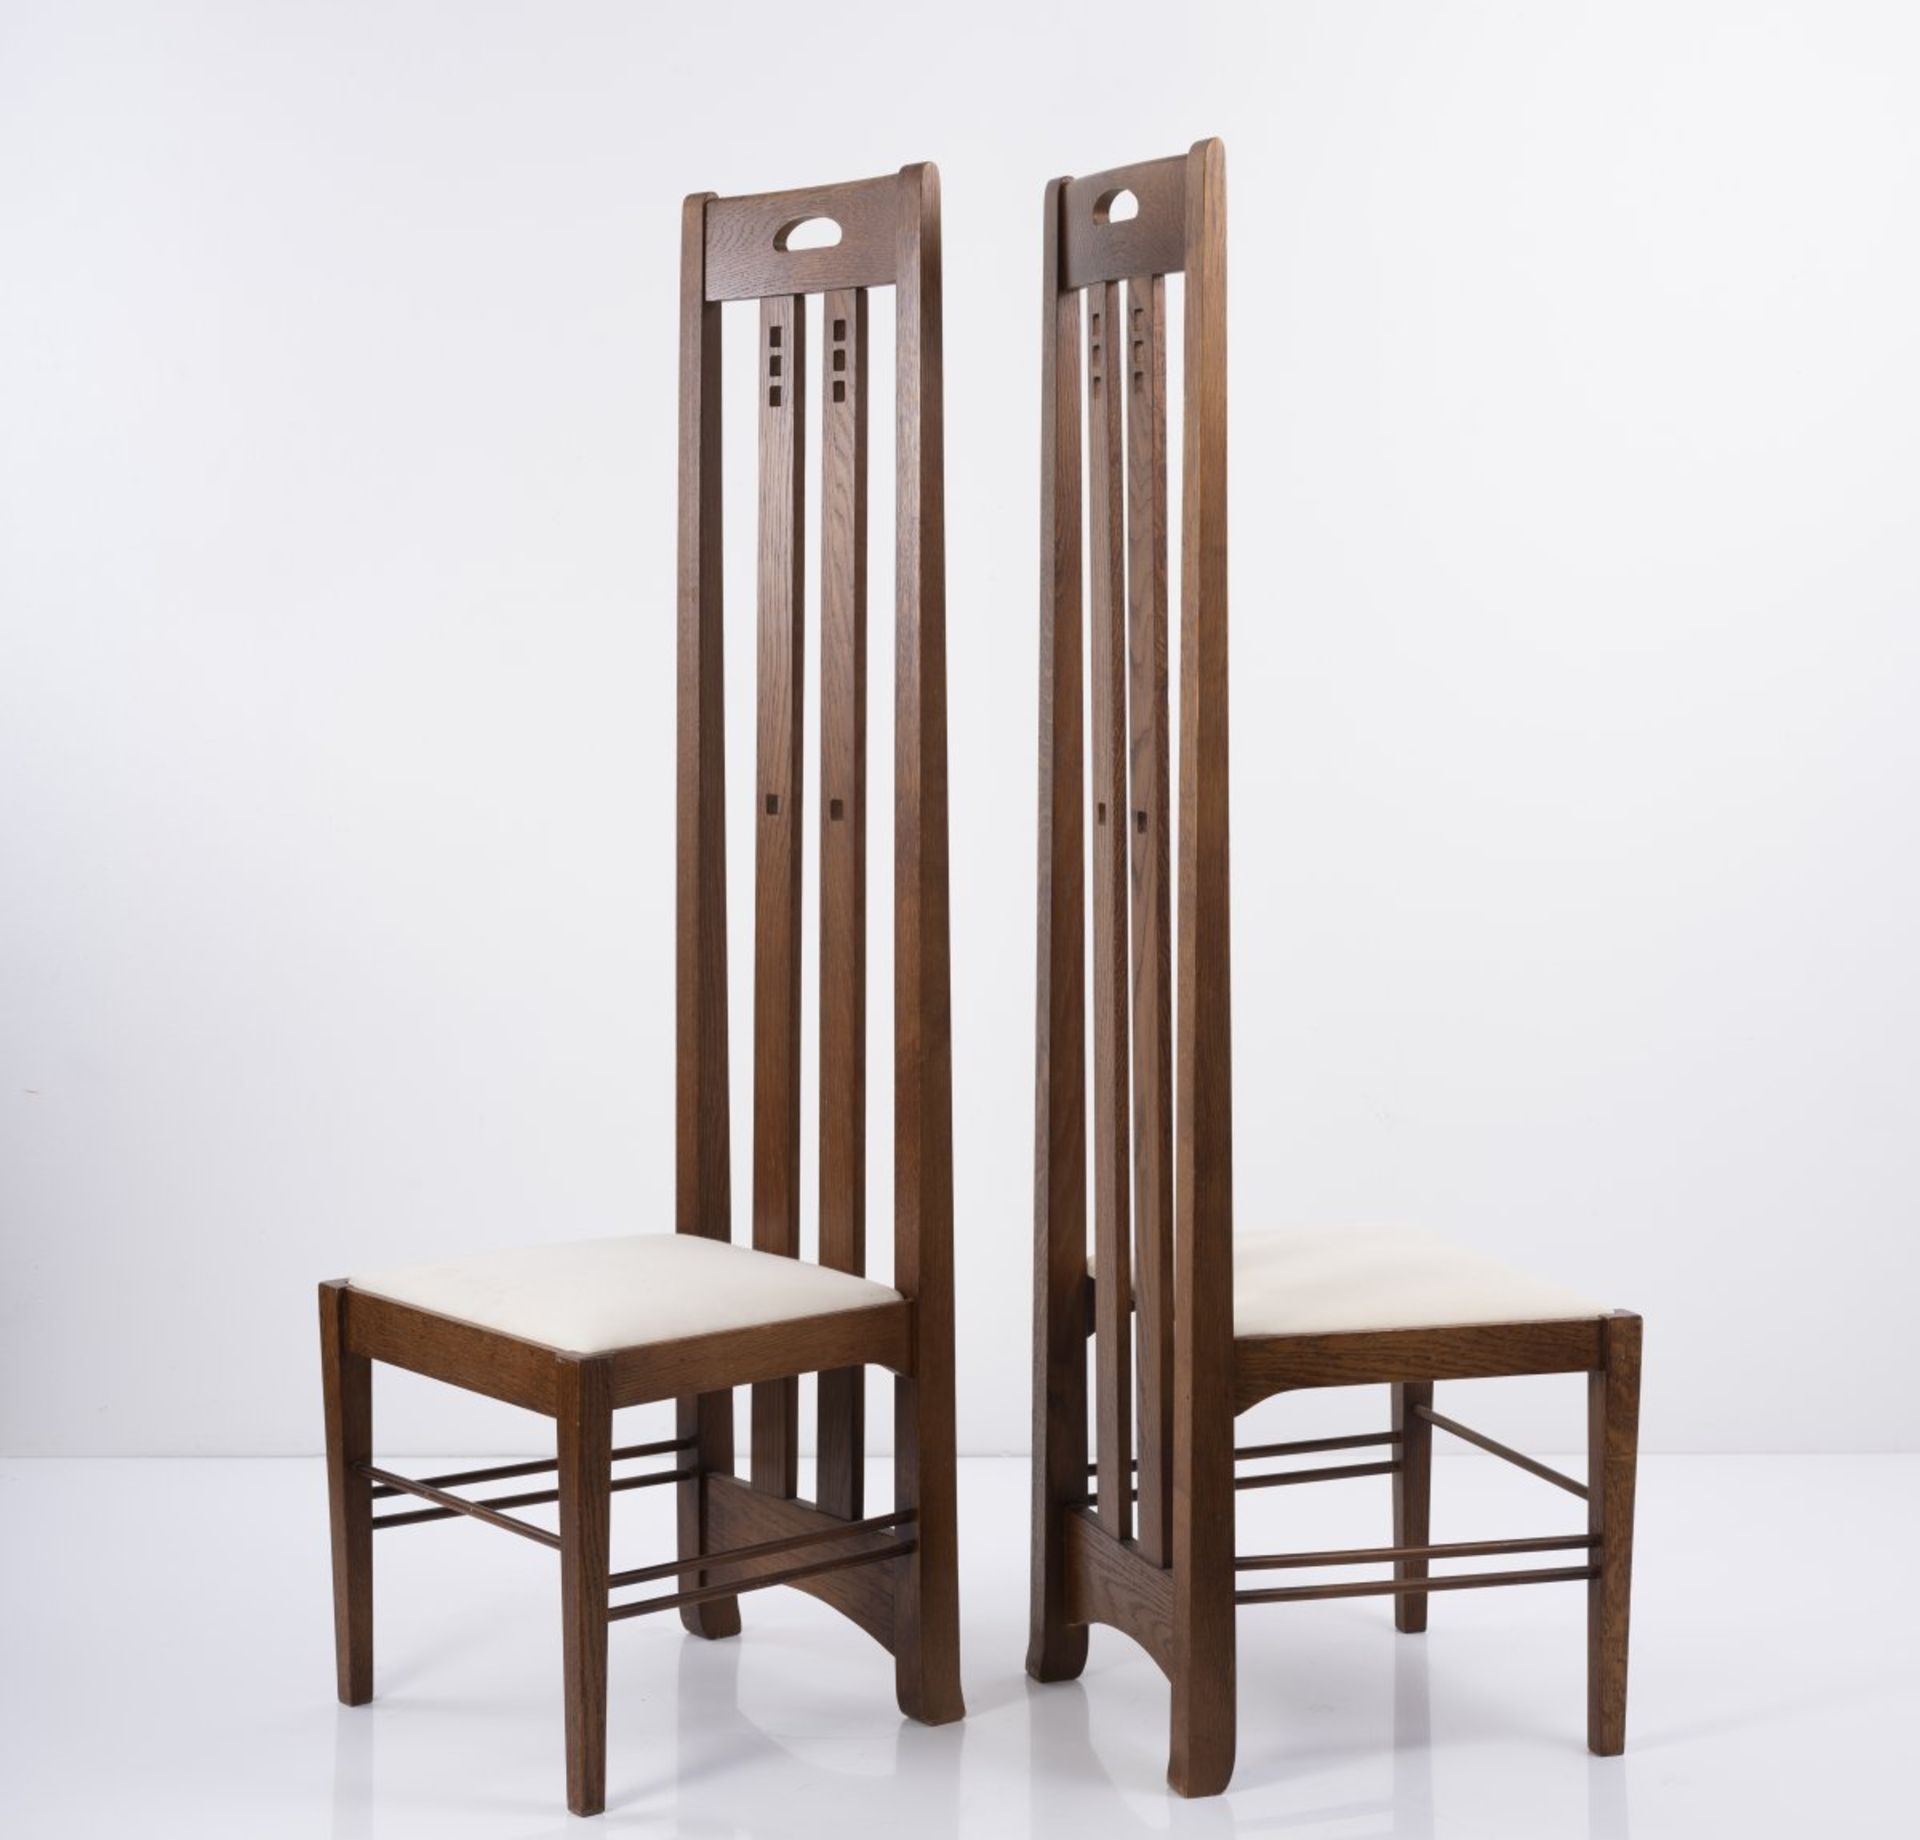 Charles Rennie Mackintosh, Set of four 'Ingram' chairs, um 1900